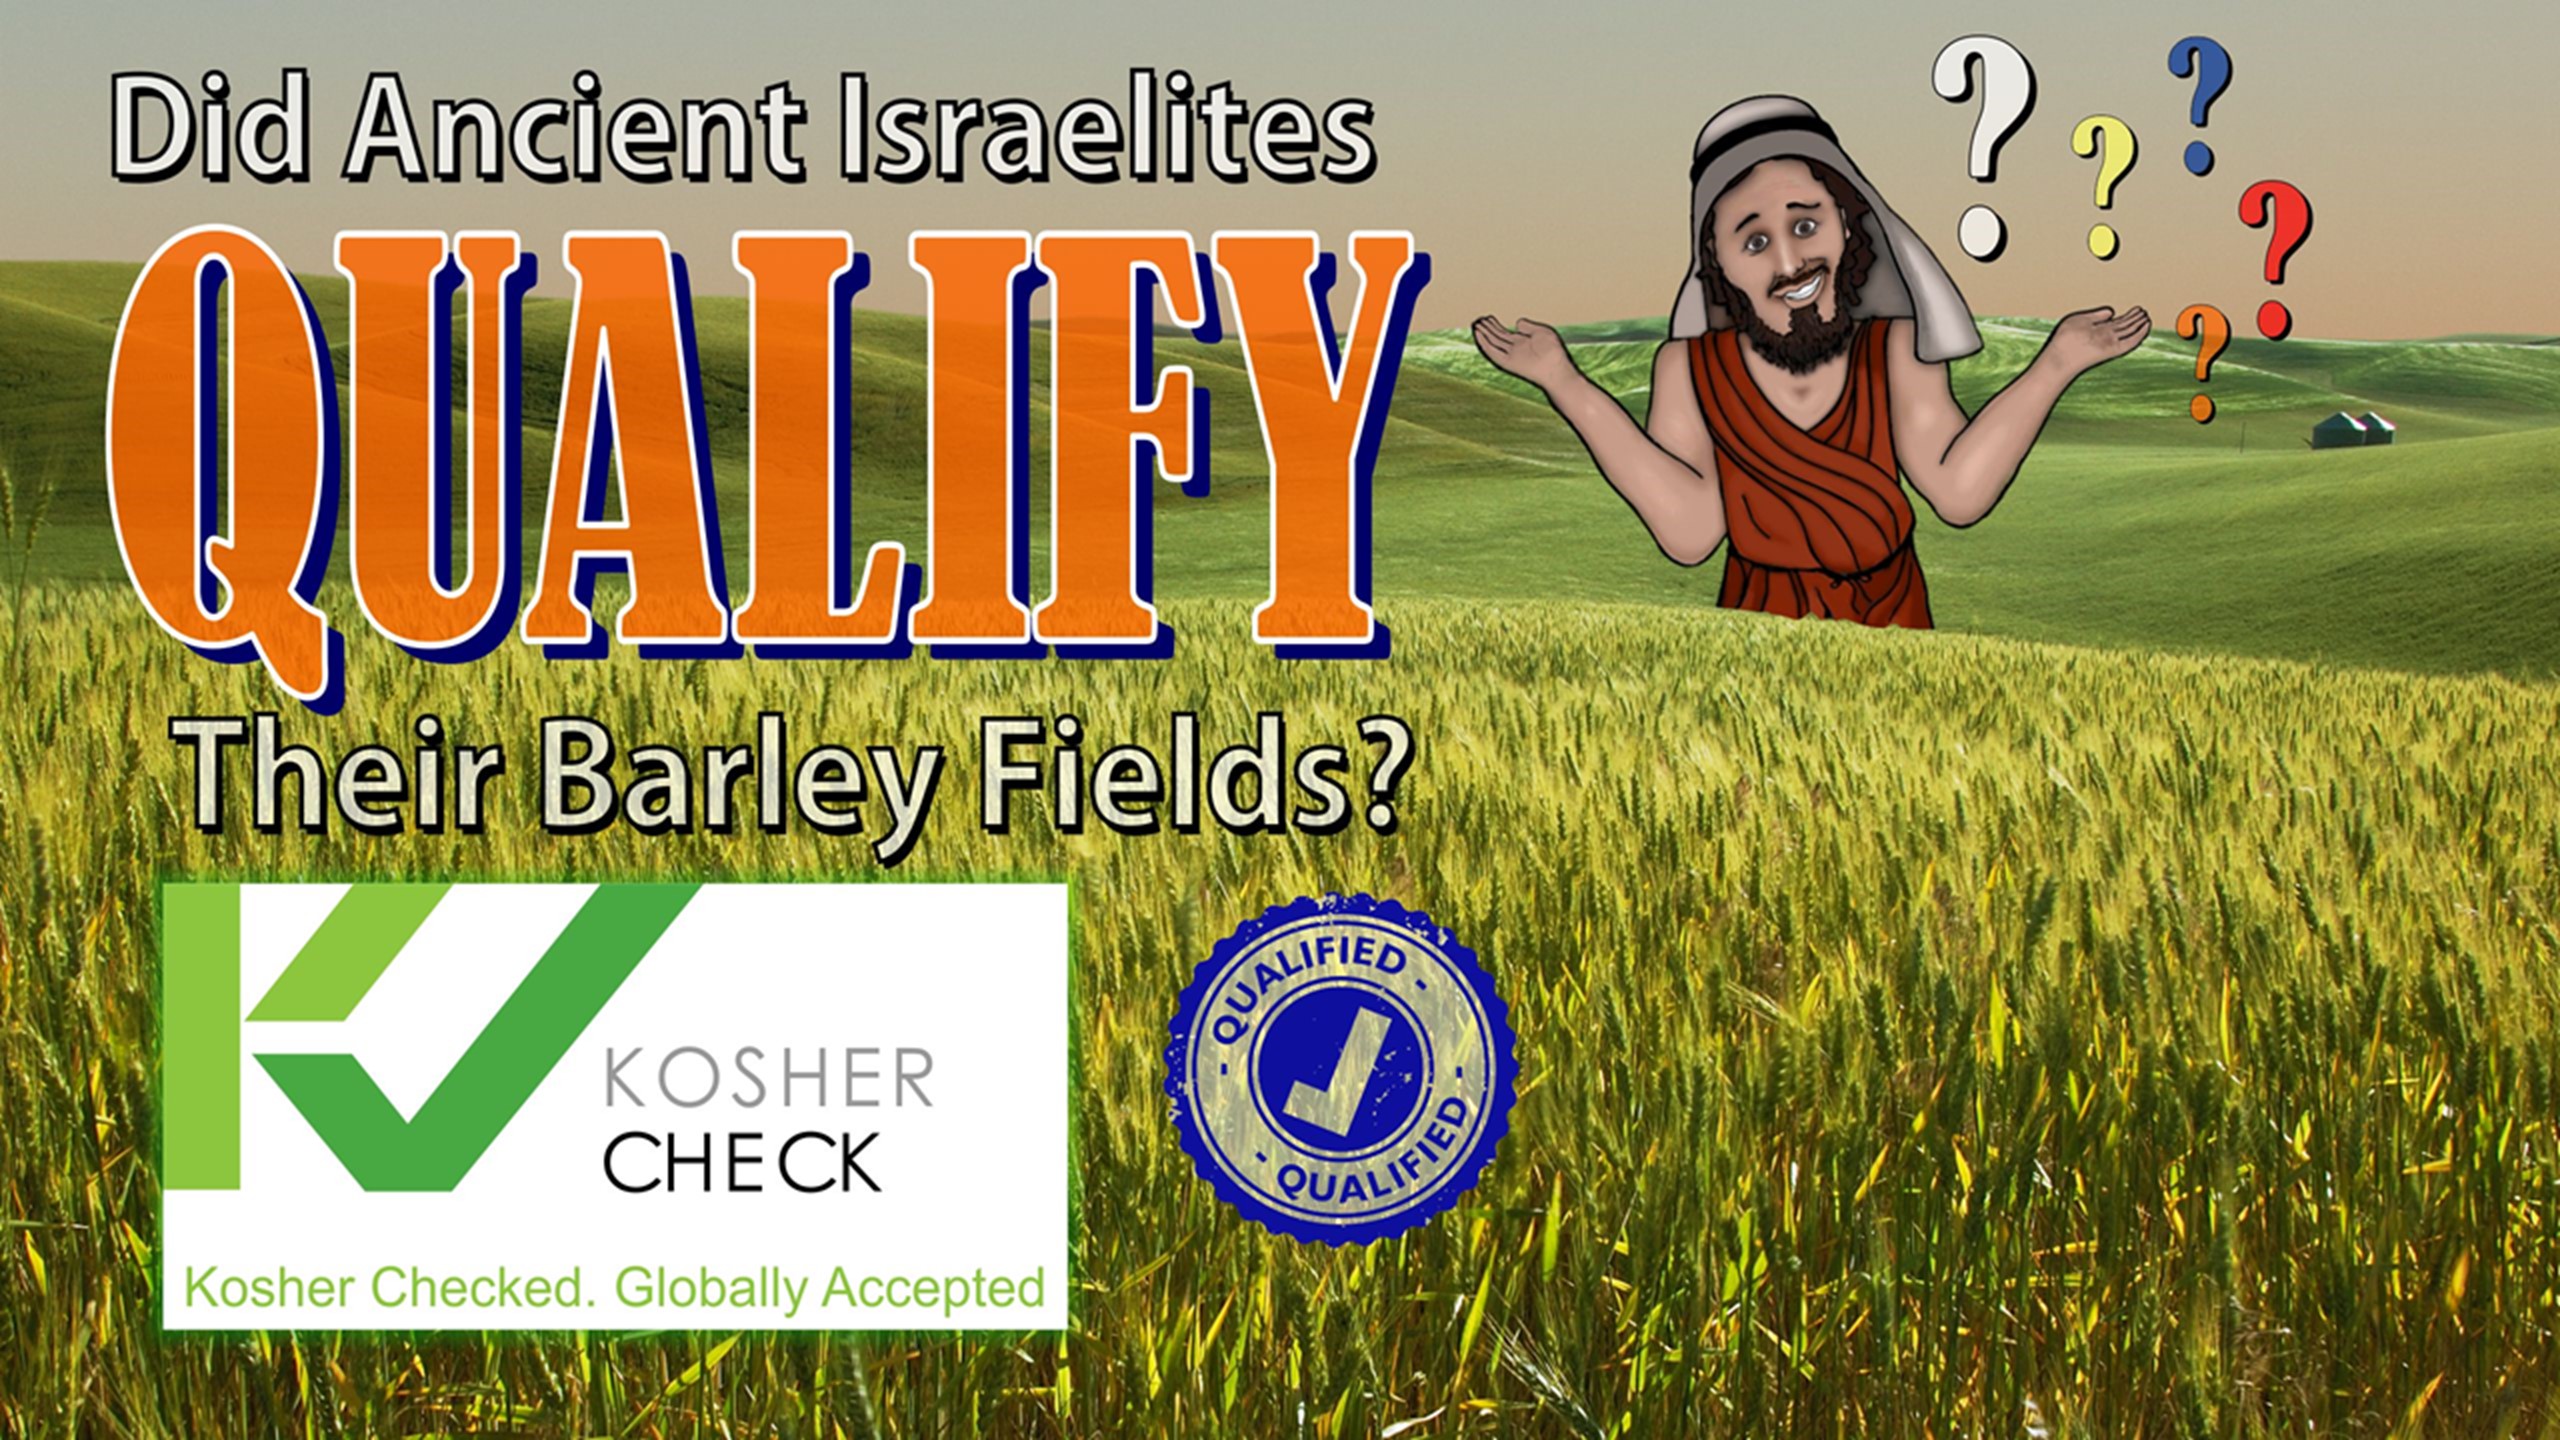 Did Ancient Israelites Qualify Their Fields?